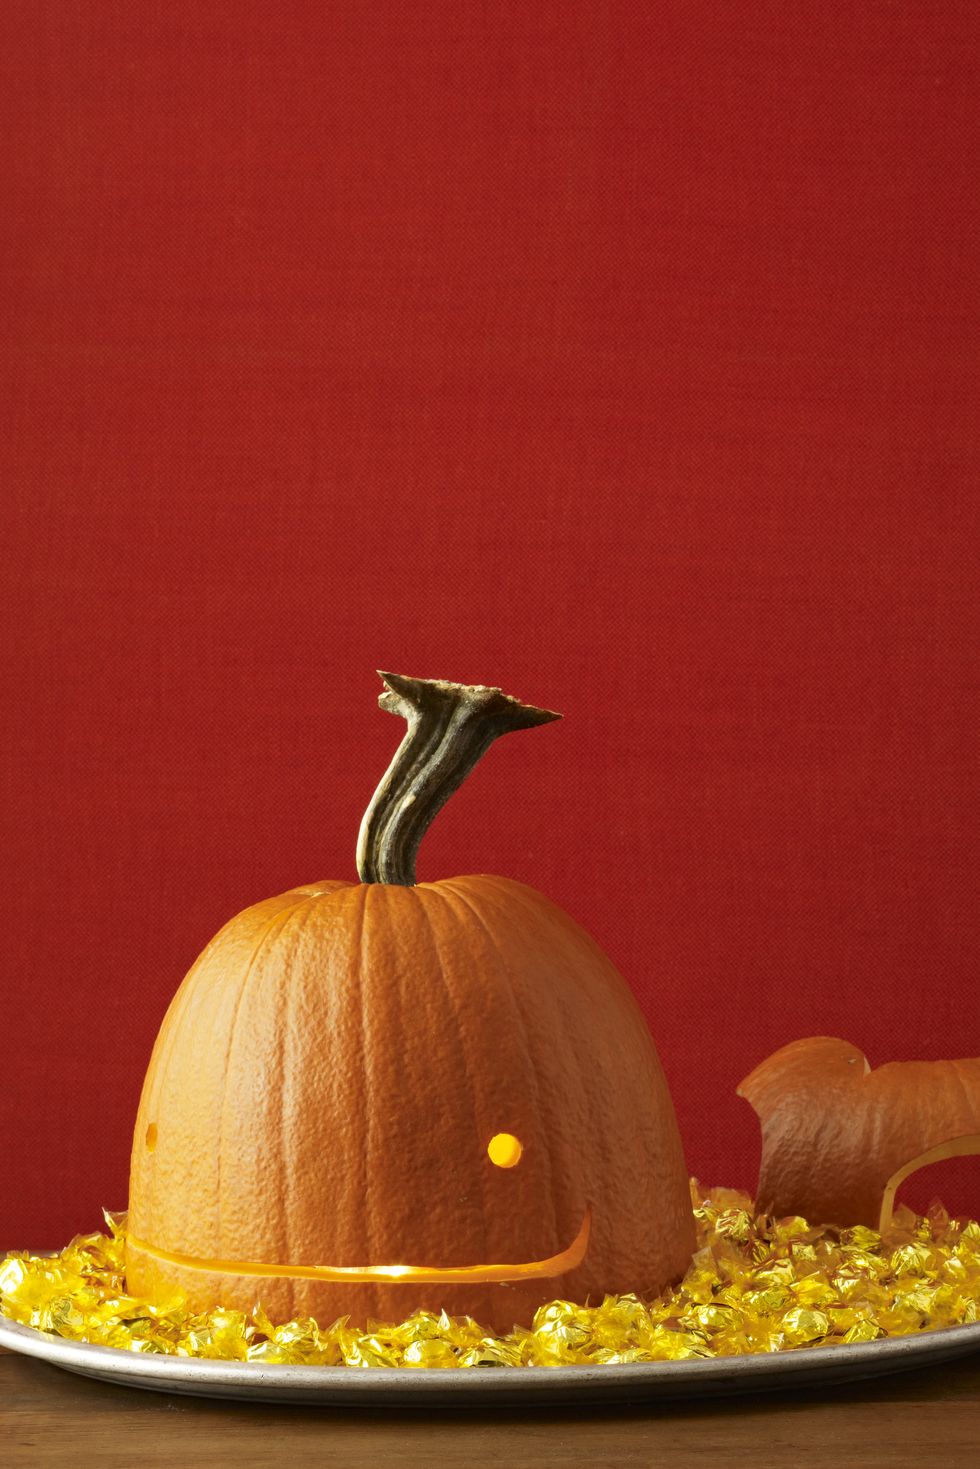 pumpkin carving ideas whale of a time pumpkin